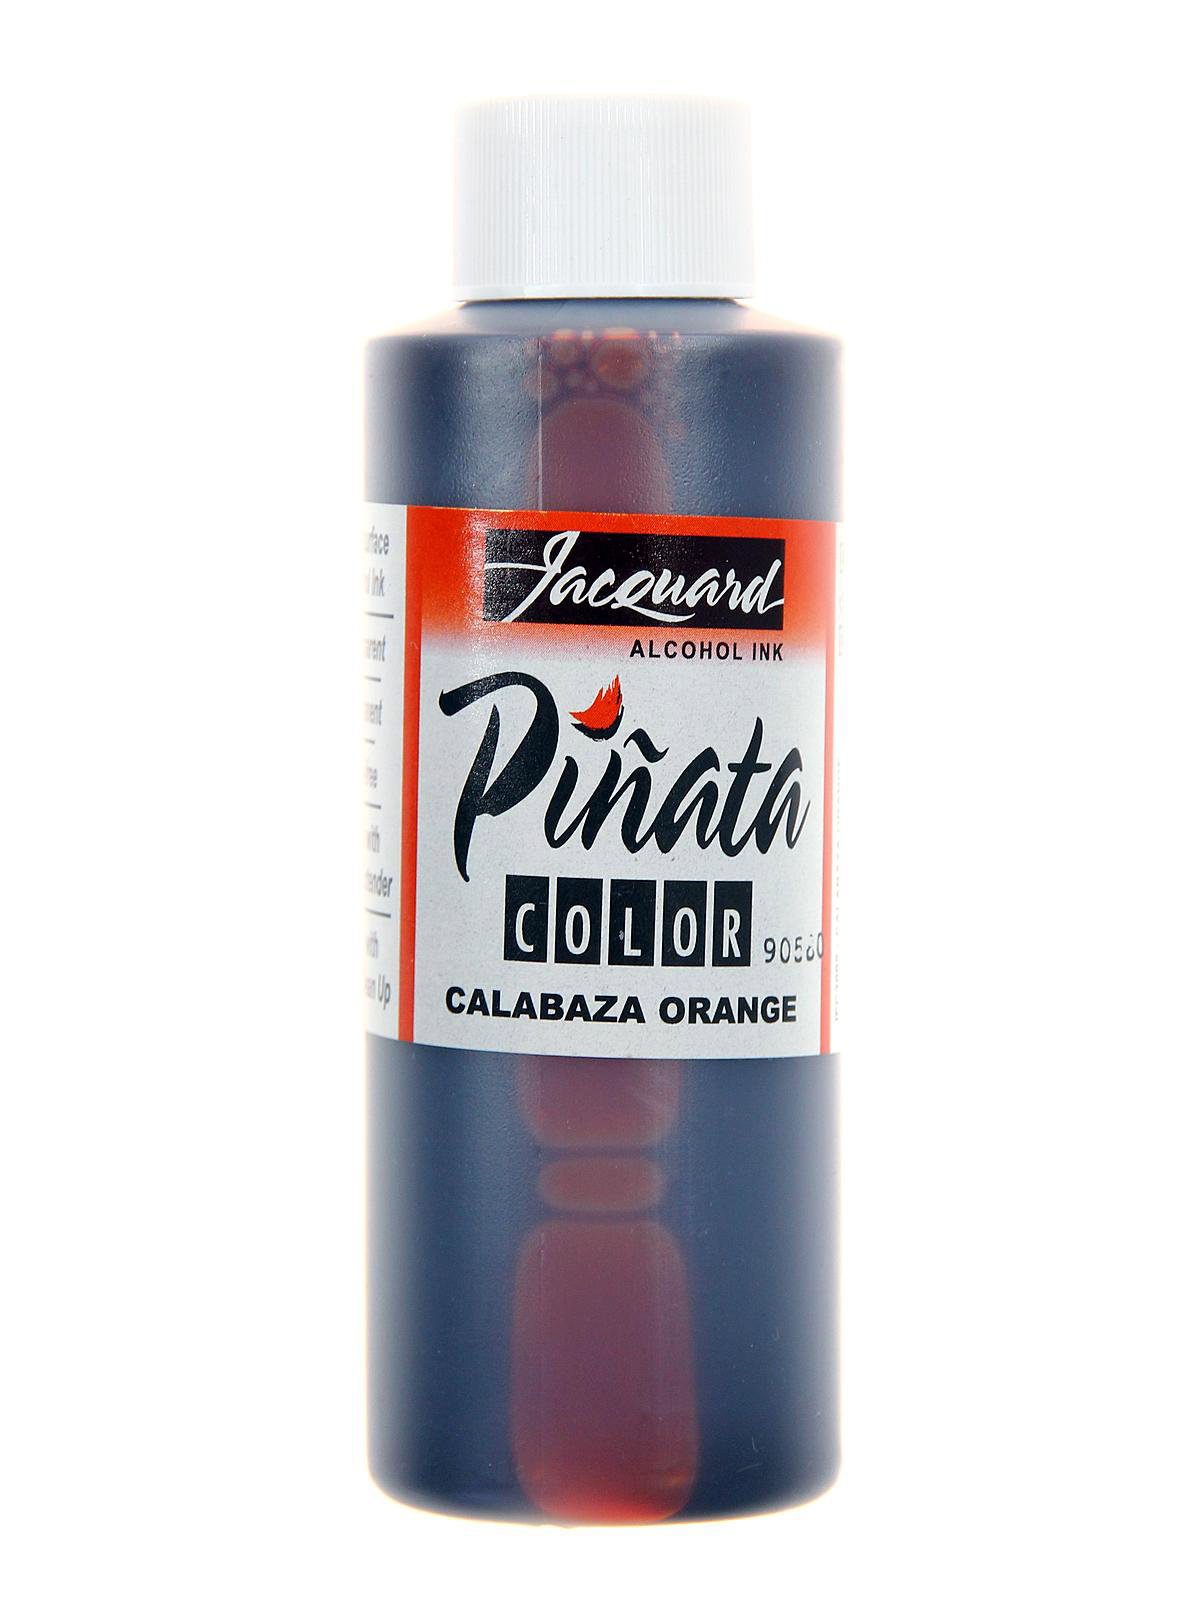 Jacquard Pinata Color Alcohol Ink- Lime Green